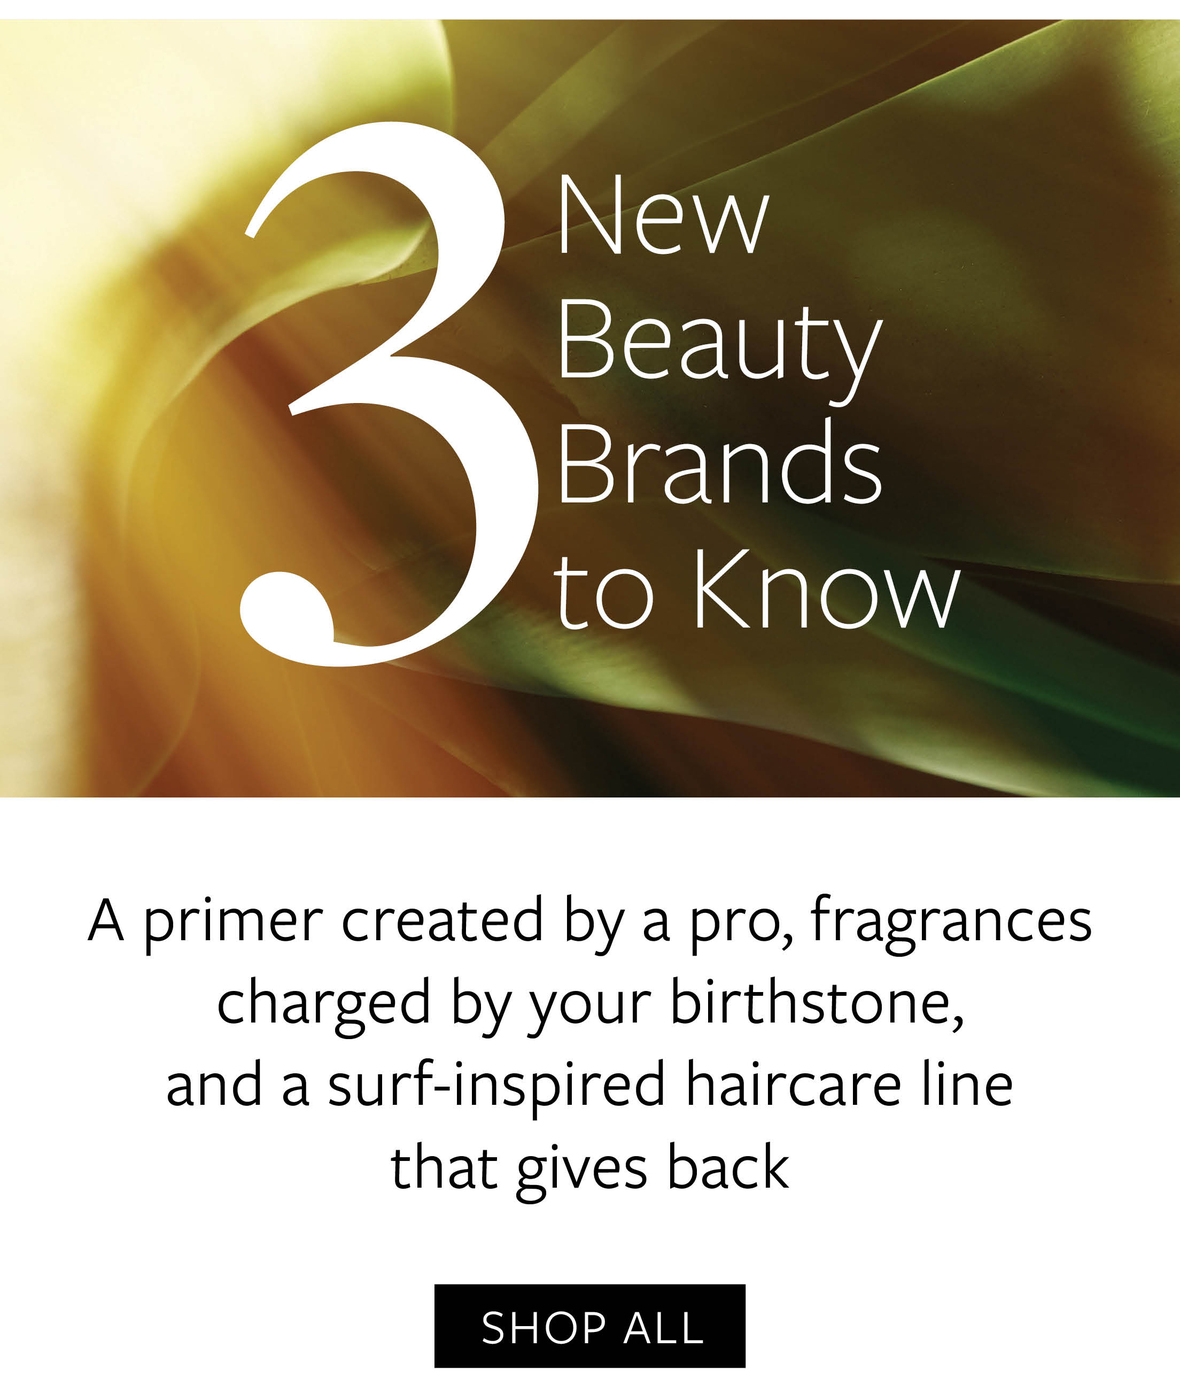 3 New Beauty Brands